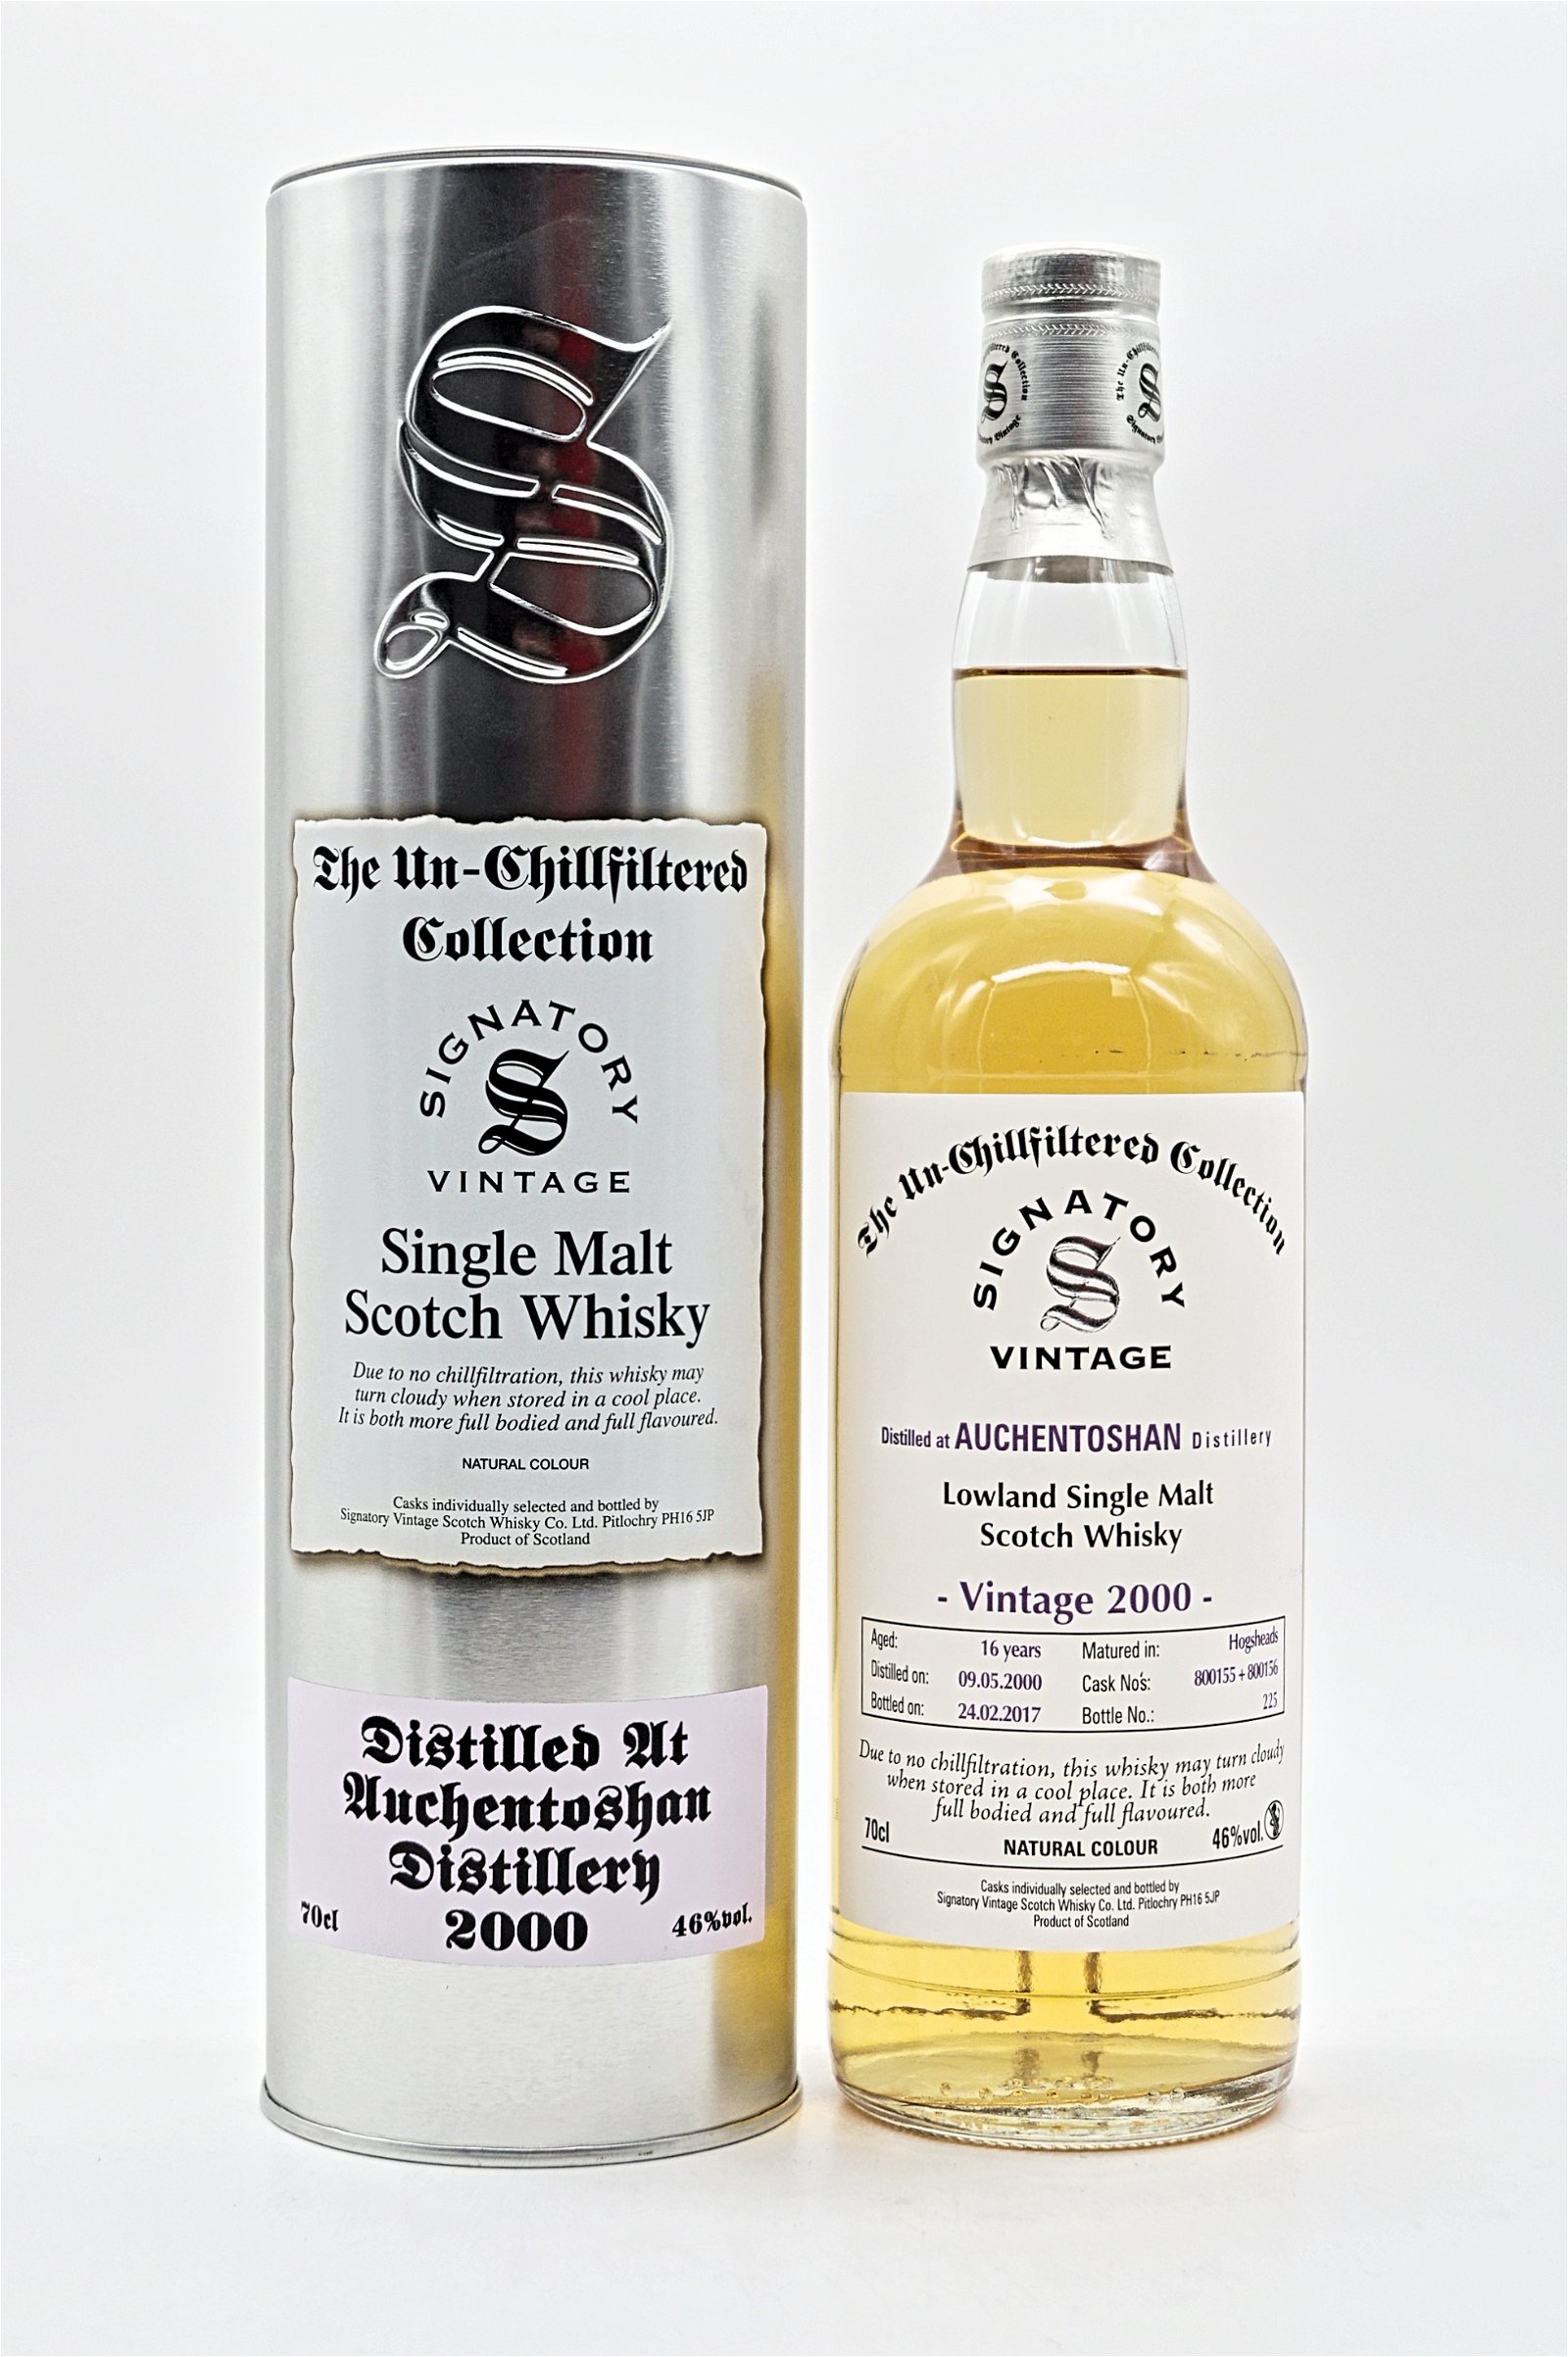 Signatory Vintage The Un-Chillfiltered Collection Auchentoshan Distillery 2000 Single Malt Scotch Whisky